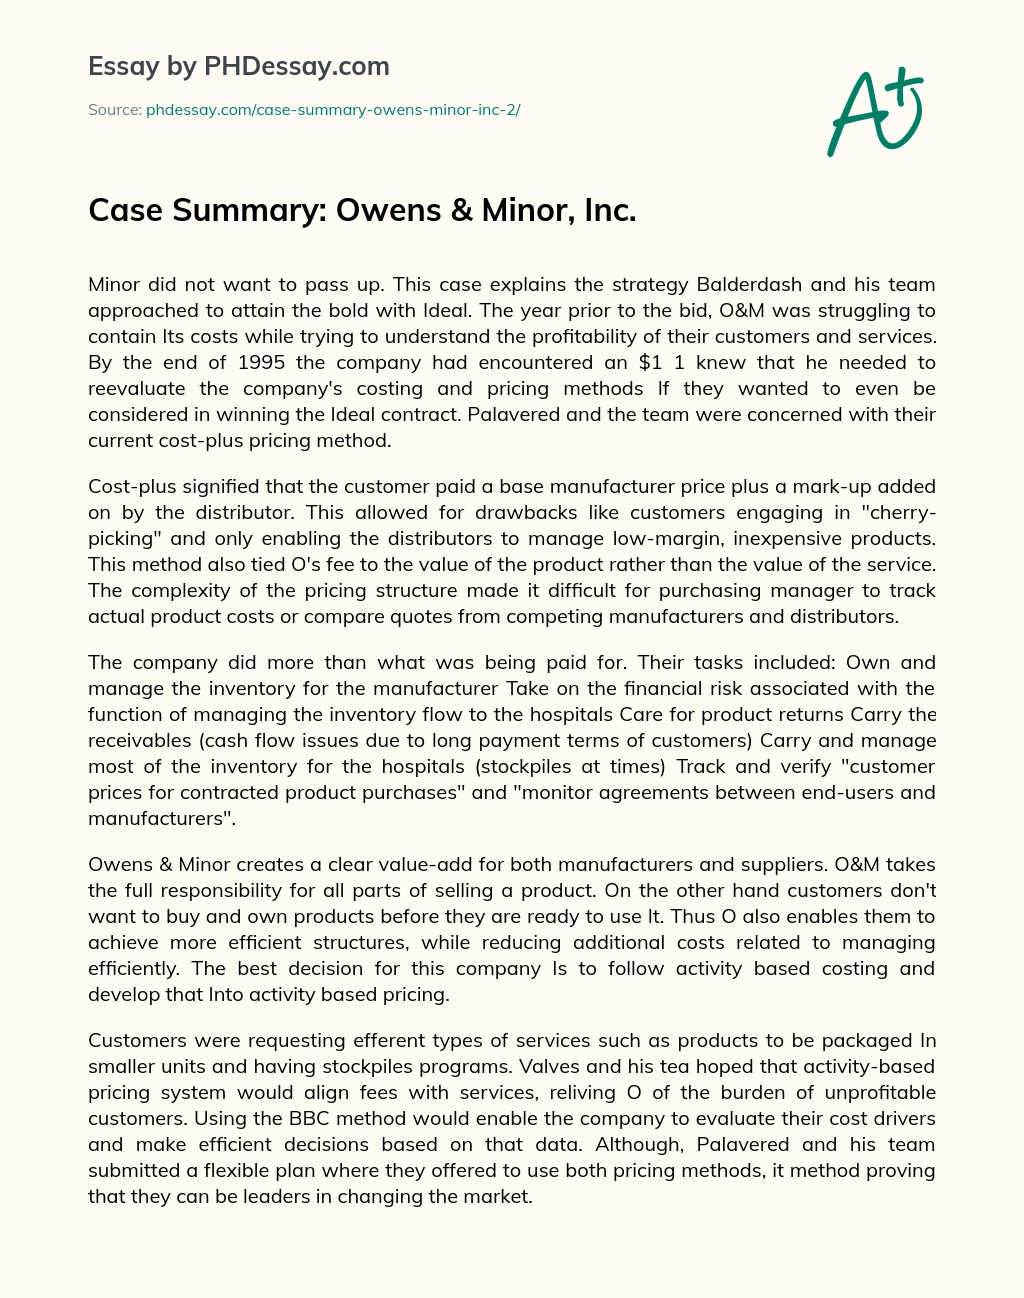 Case Summary: Owens & Minor, Inc. essay